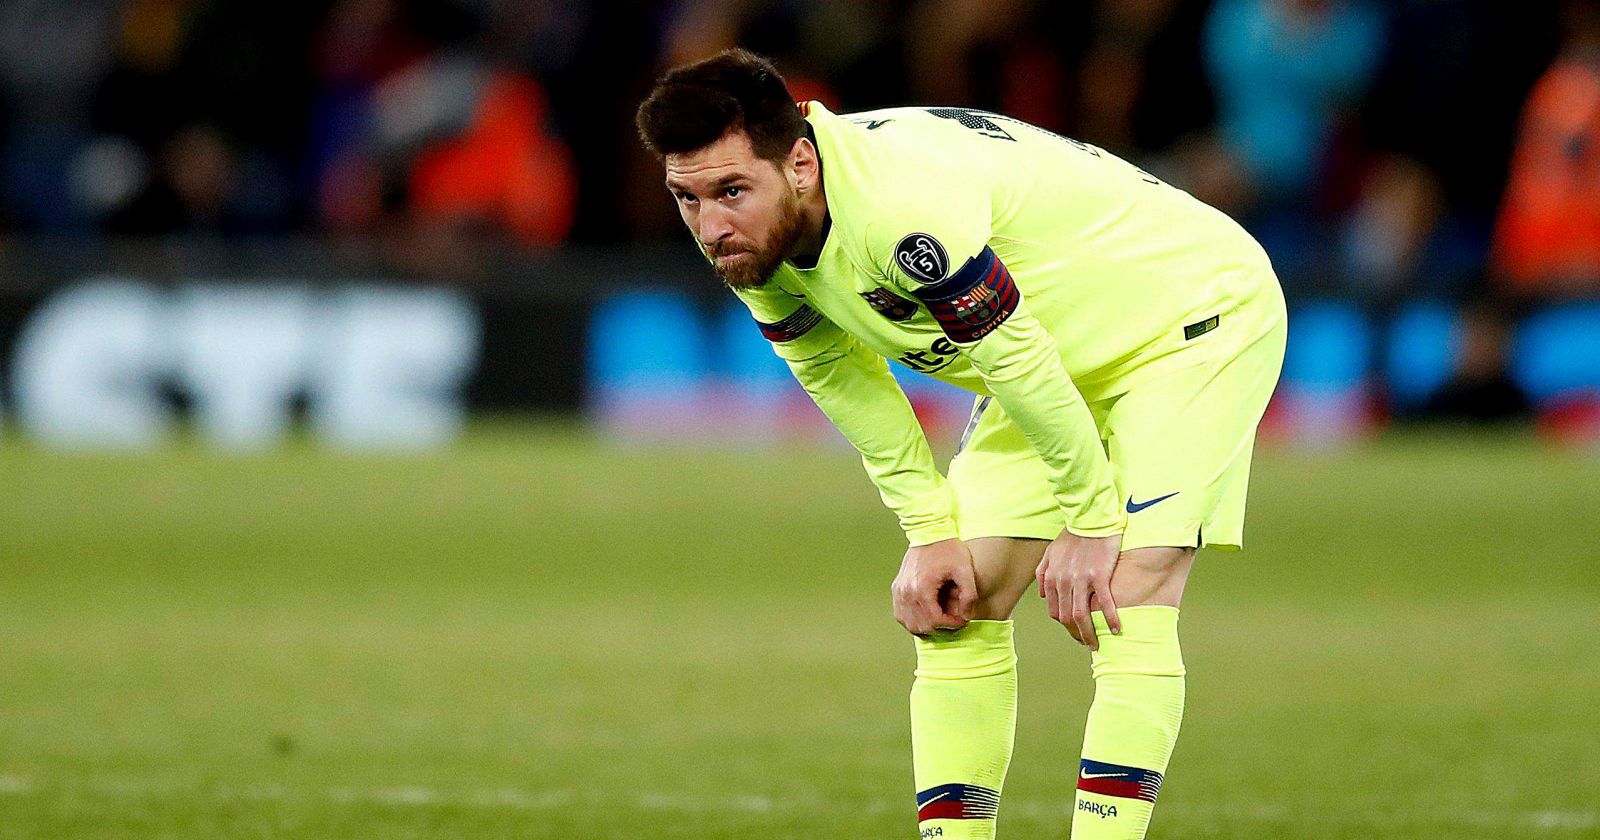 Messi FC Barcelona